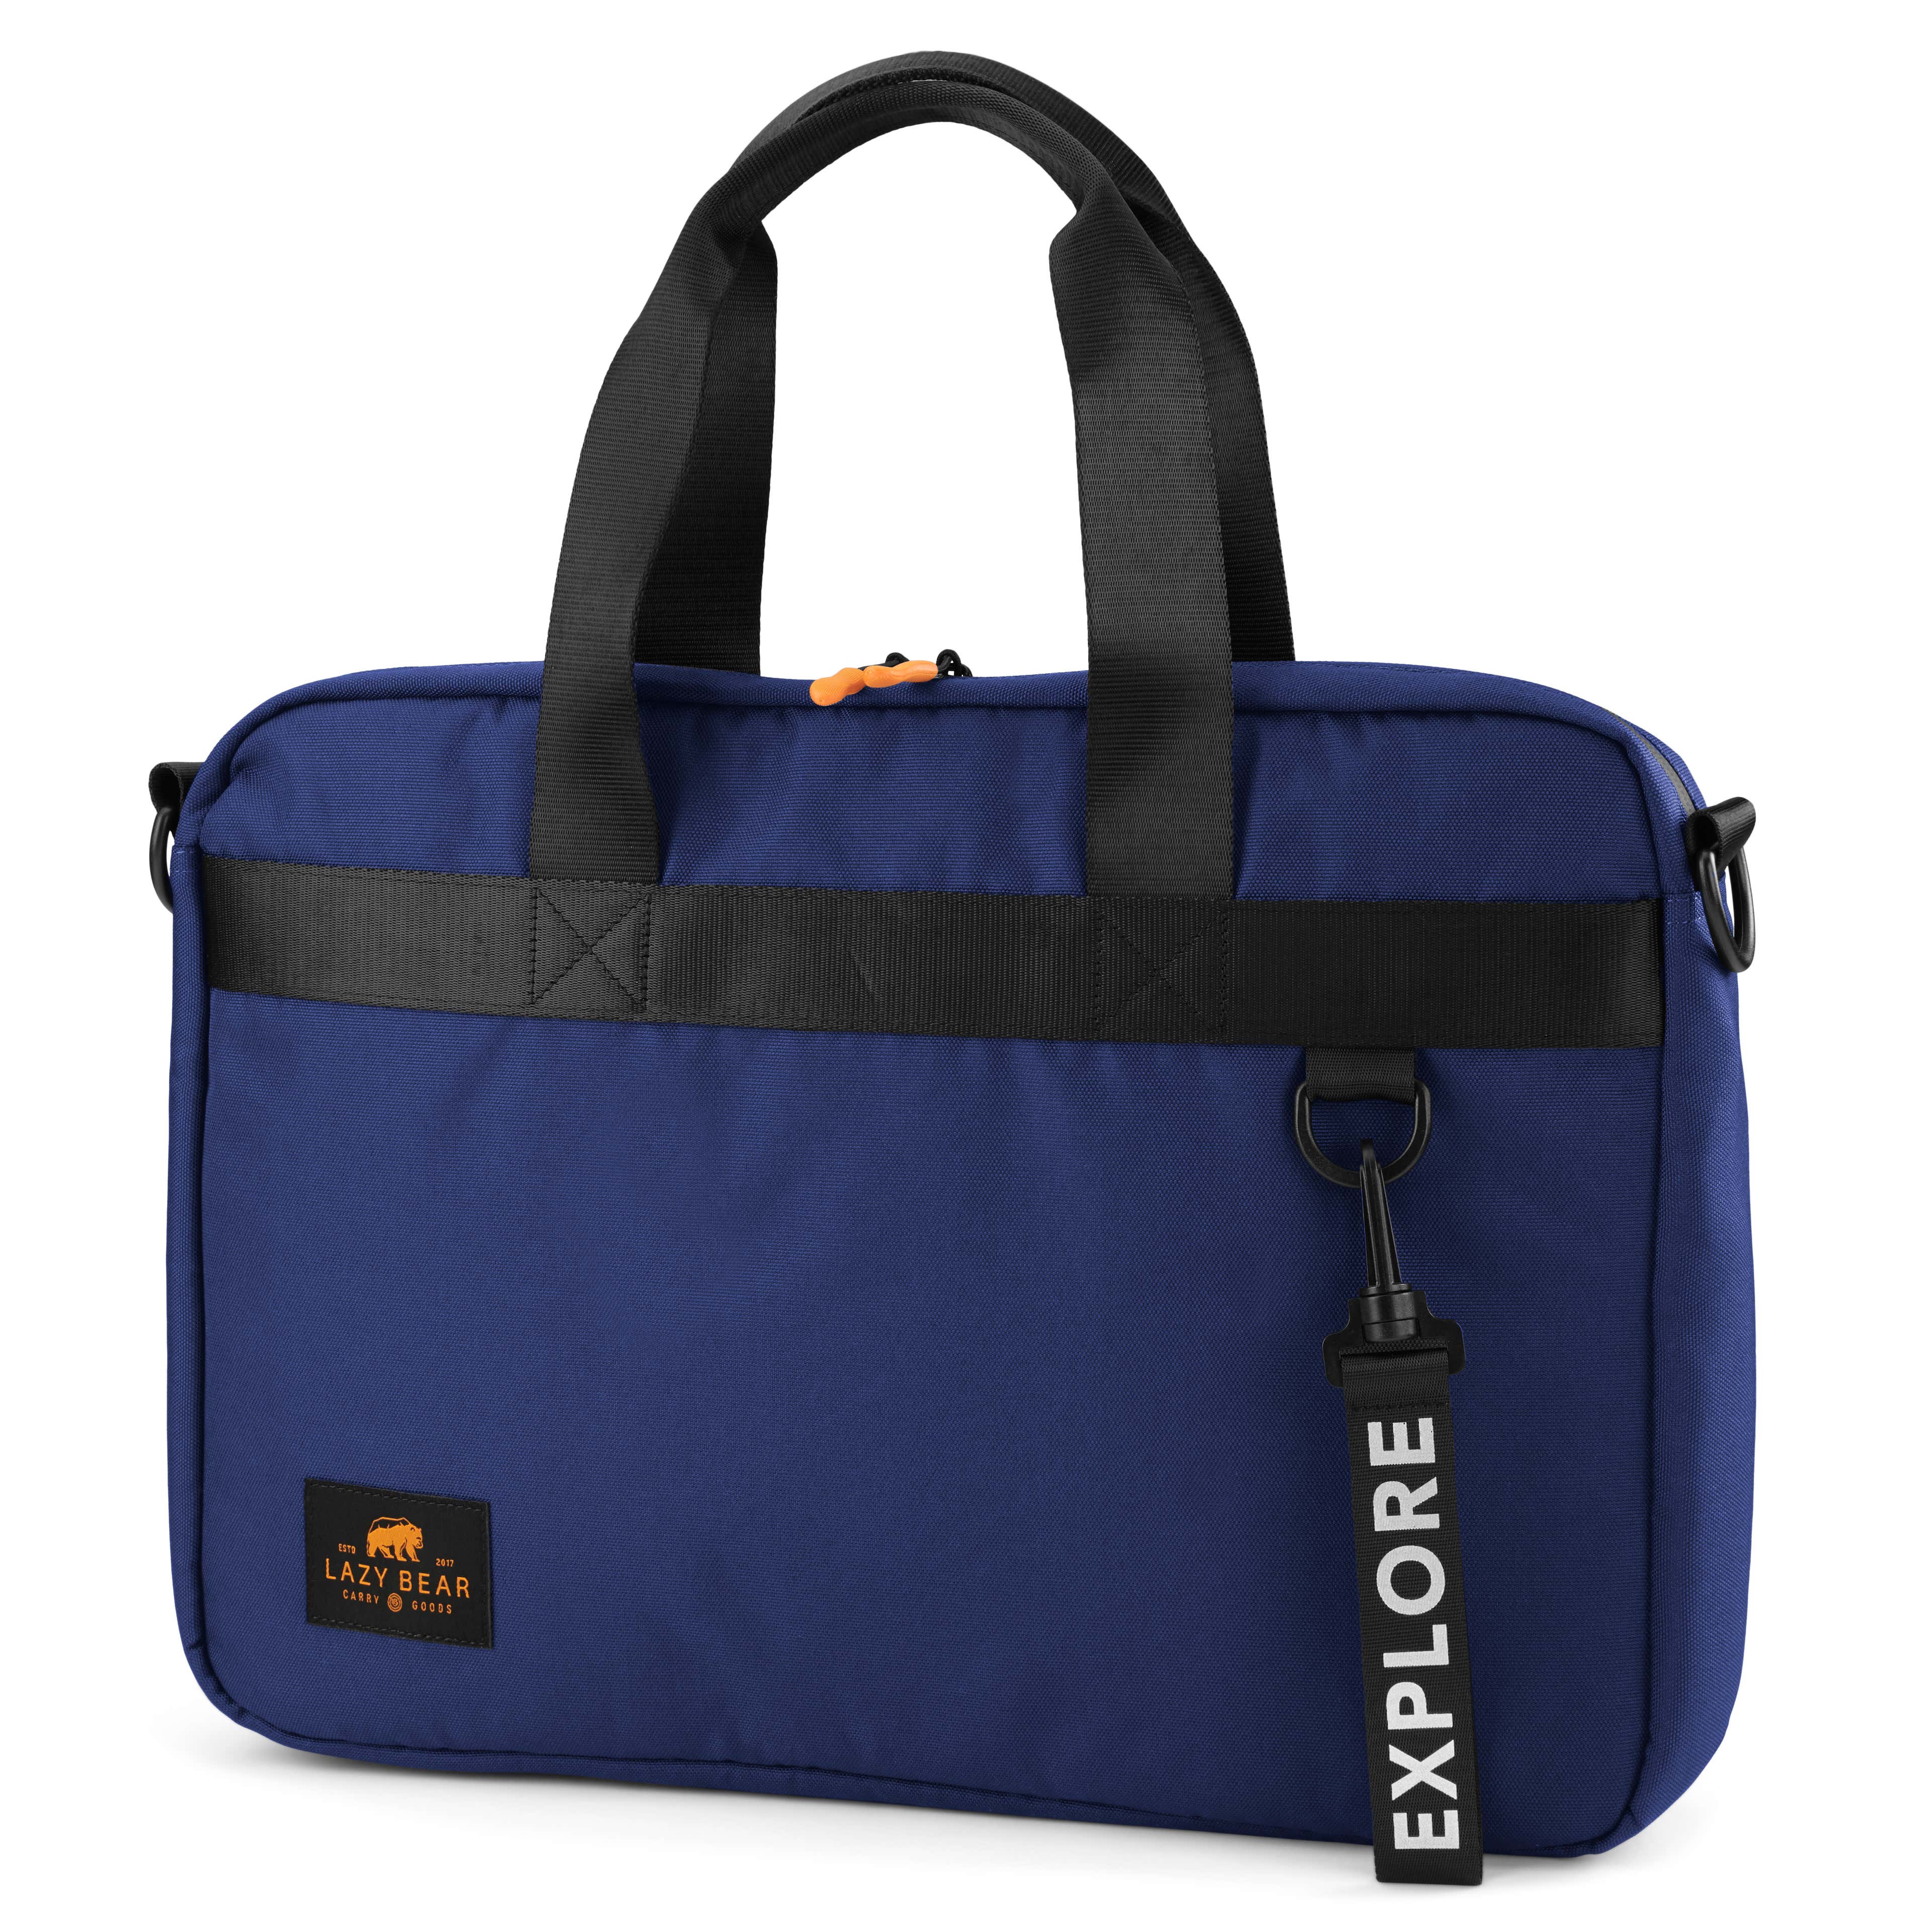 Lancy Blue Limited Edition Laptop Bag 